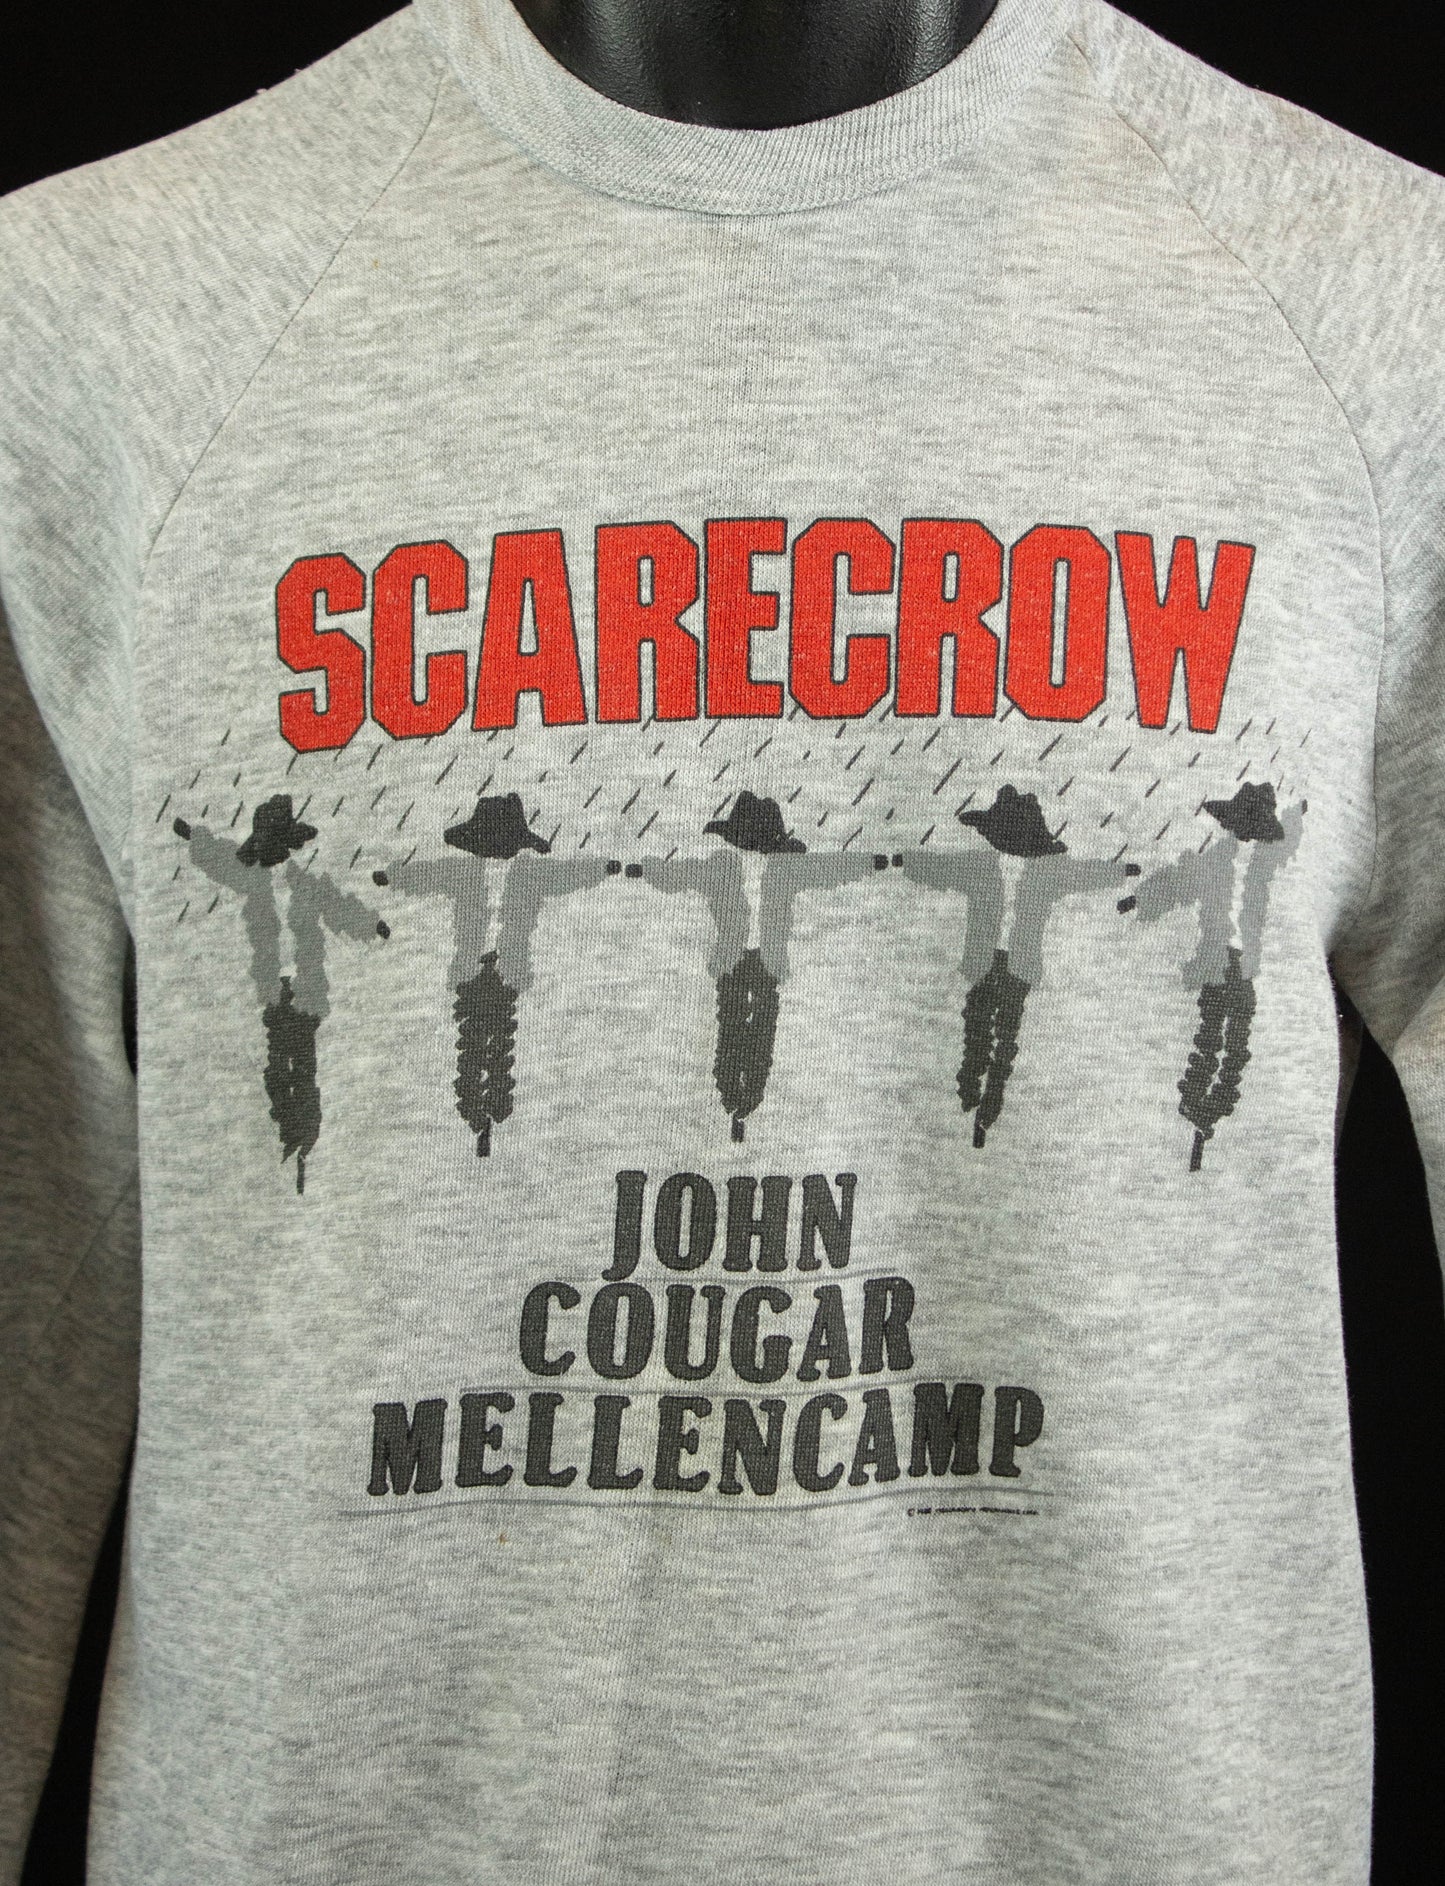 Vintage John Cougar Mellencamp Concert Crewneck Sweatshirt 1985 Scarecrow Heather Grey Small-Medium